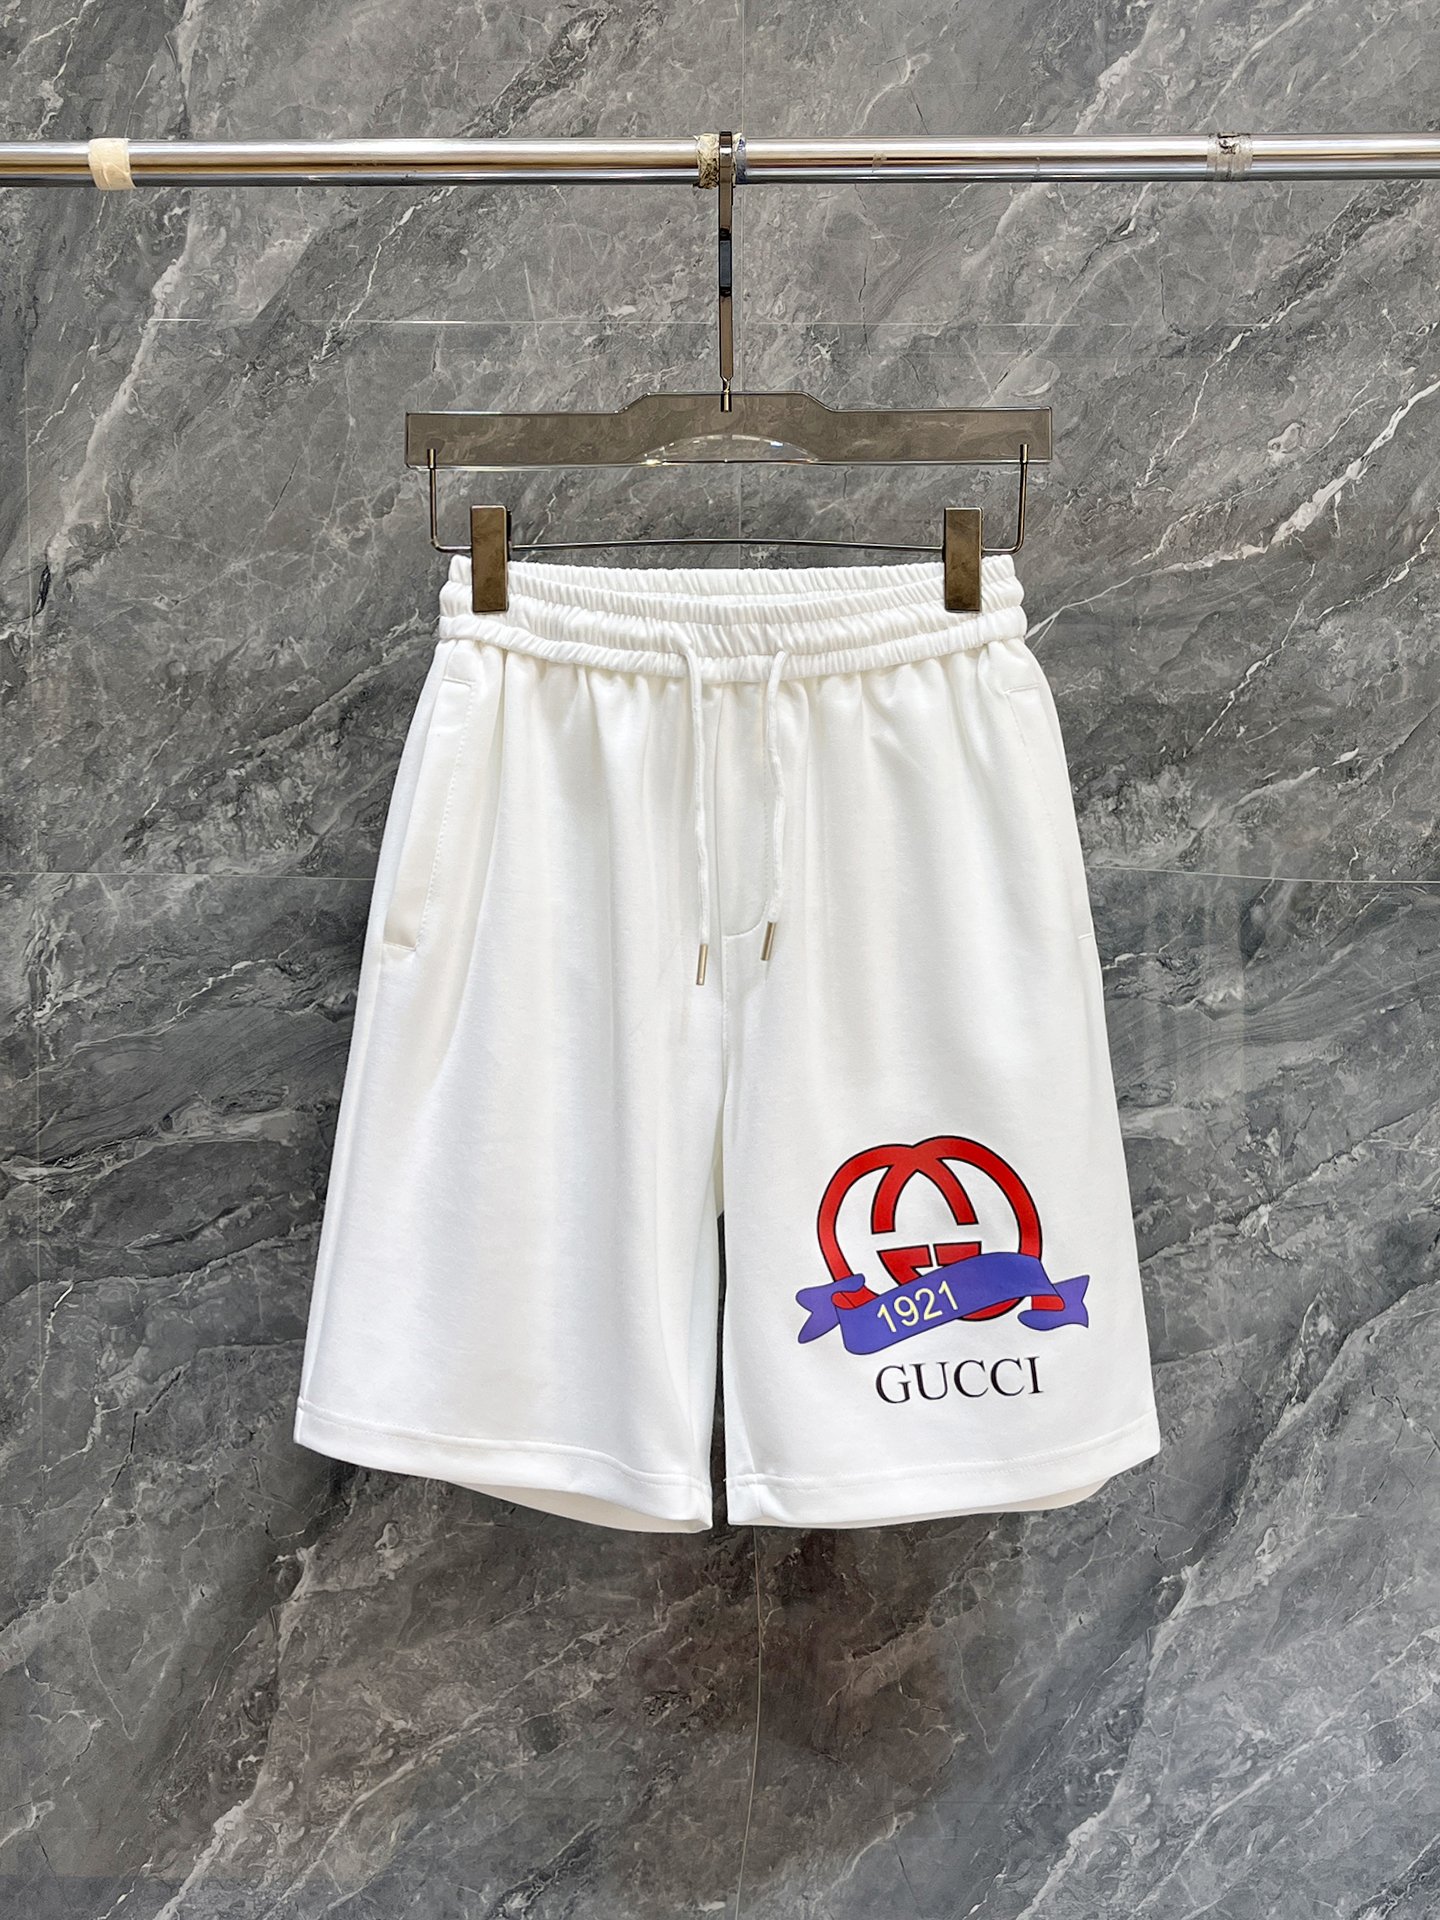 Gucci Replicas
 Clothing Shorts Men Summer Collection Casual